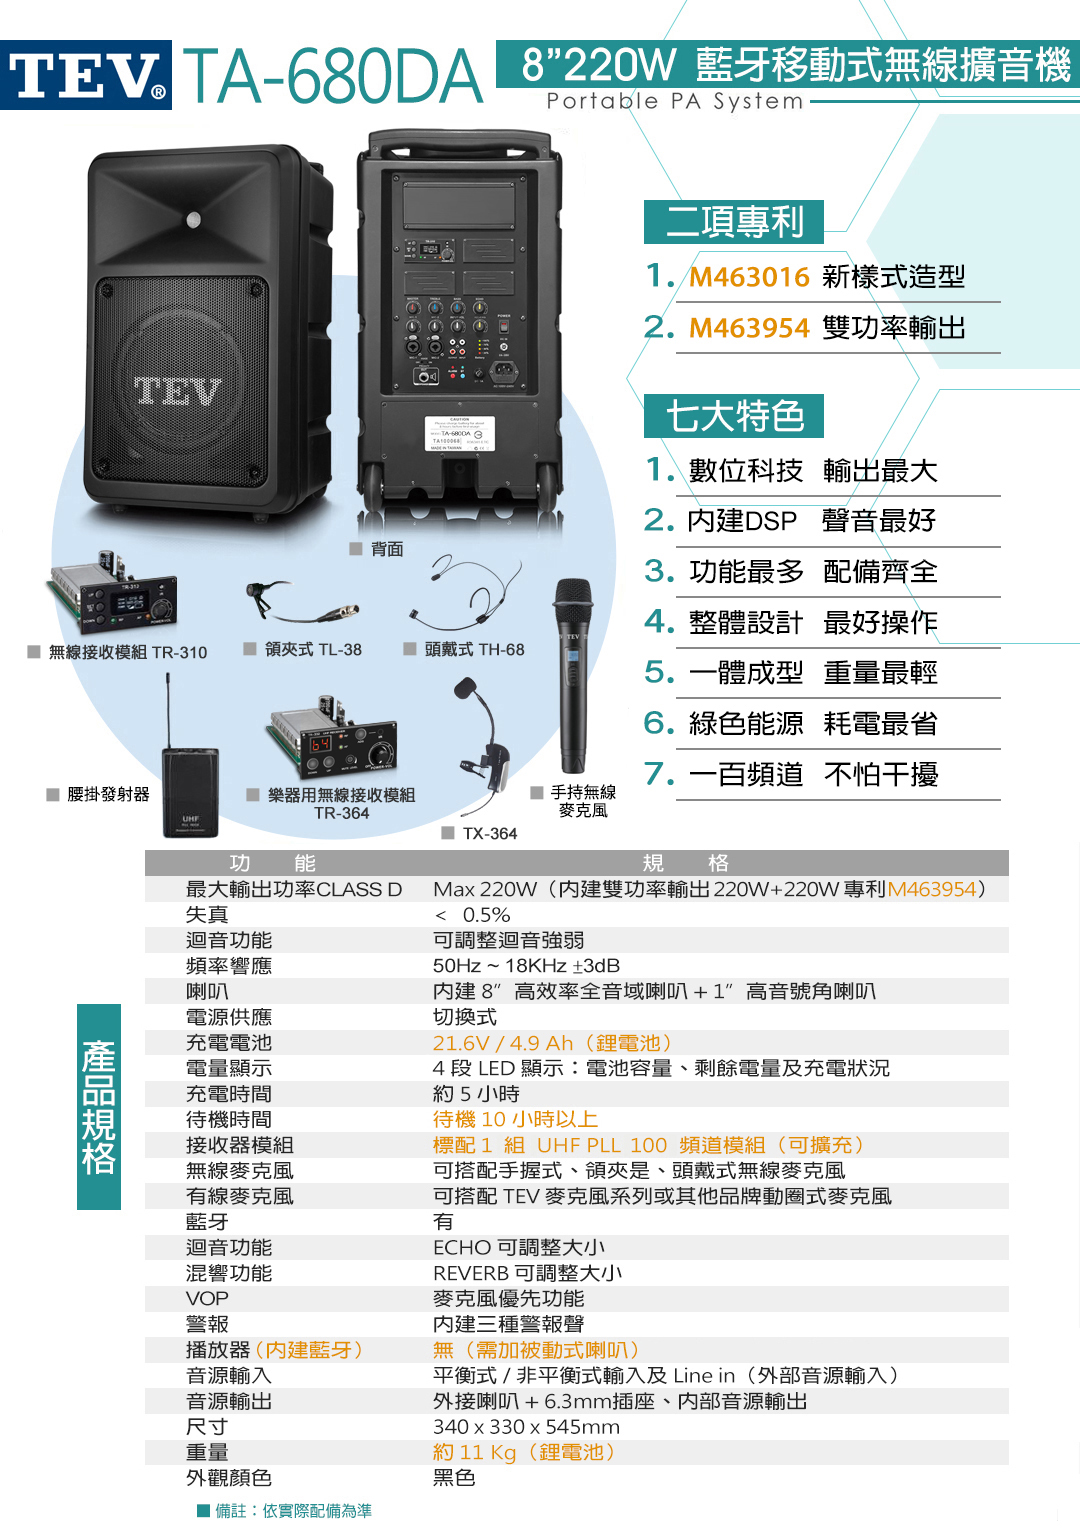 TA-60DA 8220W 藍牙移動式無線擴音機Portable  SystemTEV二項專利.M463016 新樣式造型2. M463954 雙功率輸出七大特色1.數位科技 輸出最大2.DSP 聲音最好 背面3.功最多 配備齊全4.整體設計 最好操作 無線接收模組 TR-310  式 TL-38 頭戴式 TH-685.一體成型 重量最輕6.綠色能源 耗電最省7.一百頻道 不怕干擾TB-300 樂器用無線接收模組TM-8100TR-364TX-364功能規 格最大輸出功率CLASS D失真迴音功能頻率響應喇叭電源供應充電電池電量顯示充電時間待機時間接收器模組無線麥克風有線麥克風藍牙迴音功能混響功能VOPMax 220W(內建雙功率輸出220W+220W專利M463954) 0.5%可調整迴音強弱50Hz~18KHz±3dB內建8高效率全音域喇叭+1高音號角喇叭切換式11.1V/5200mAh(電池)x24 段 LED 顯示:電池容量、剩餘電量及充電狀況約5小時待機10小時以上標配1 組 UHF PLL 100 頻道模組(可擴充)可搭配手握式、領夾是、頭戴式無線麥克風可搭配 TEV 麥克風系列或其他品牌動圈式麥克風有ECHO 可調整大小REVERB 可調整大小麥克風優先功能警報播放器(內建藍牙)音源輸入音源輸出内建三種警報聲無(需加被動式喇叭)平衡式/非平衡式輸入及 Line in (外部音源輸入)外接喇叭+6.3mm插座、內部音源輸出340 x 330 x 545mm尺寸重量約 11 (鋰電池)外觀顏色黑色 備註:依實際配備為準